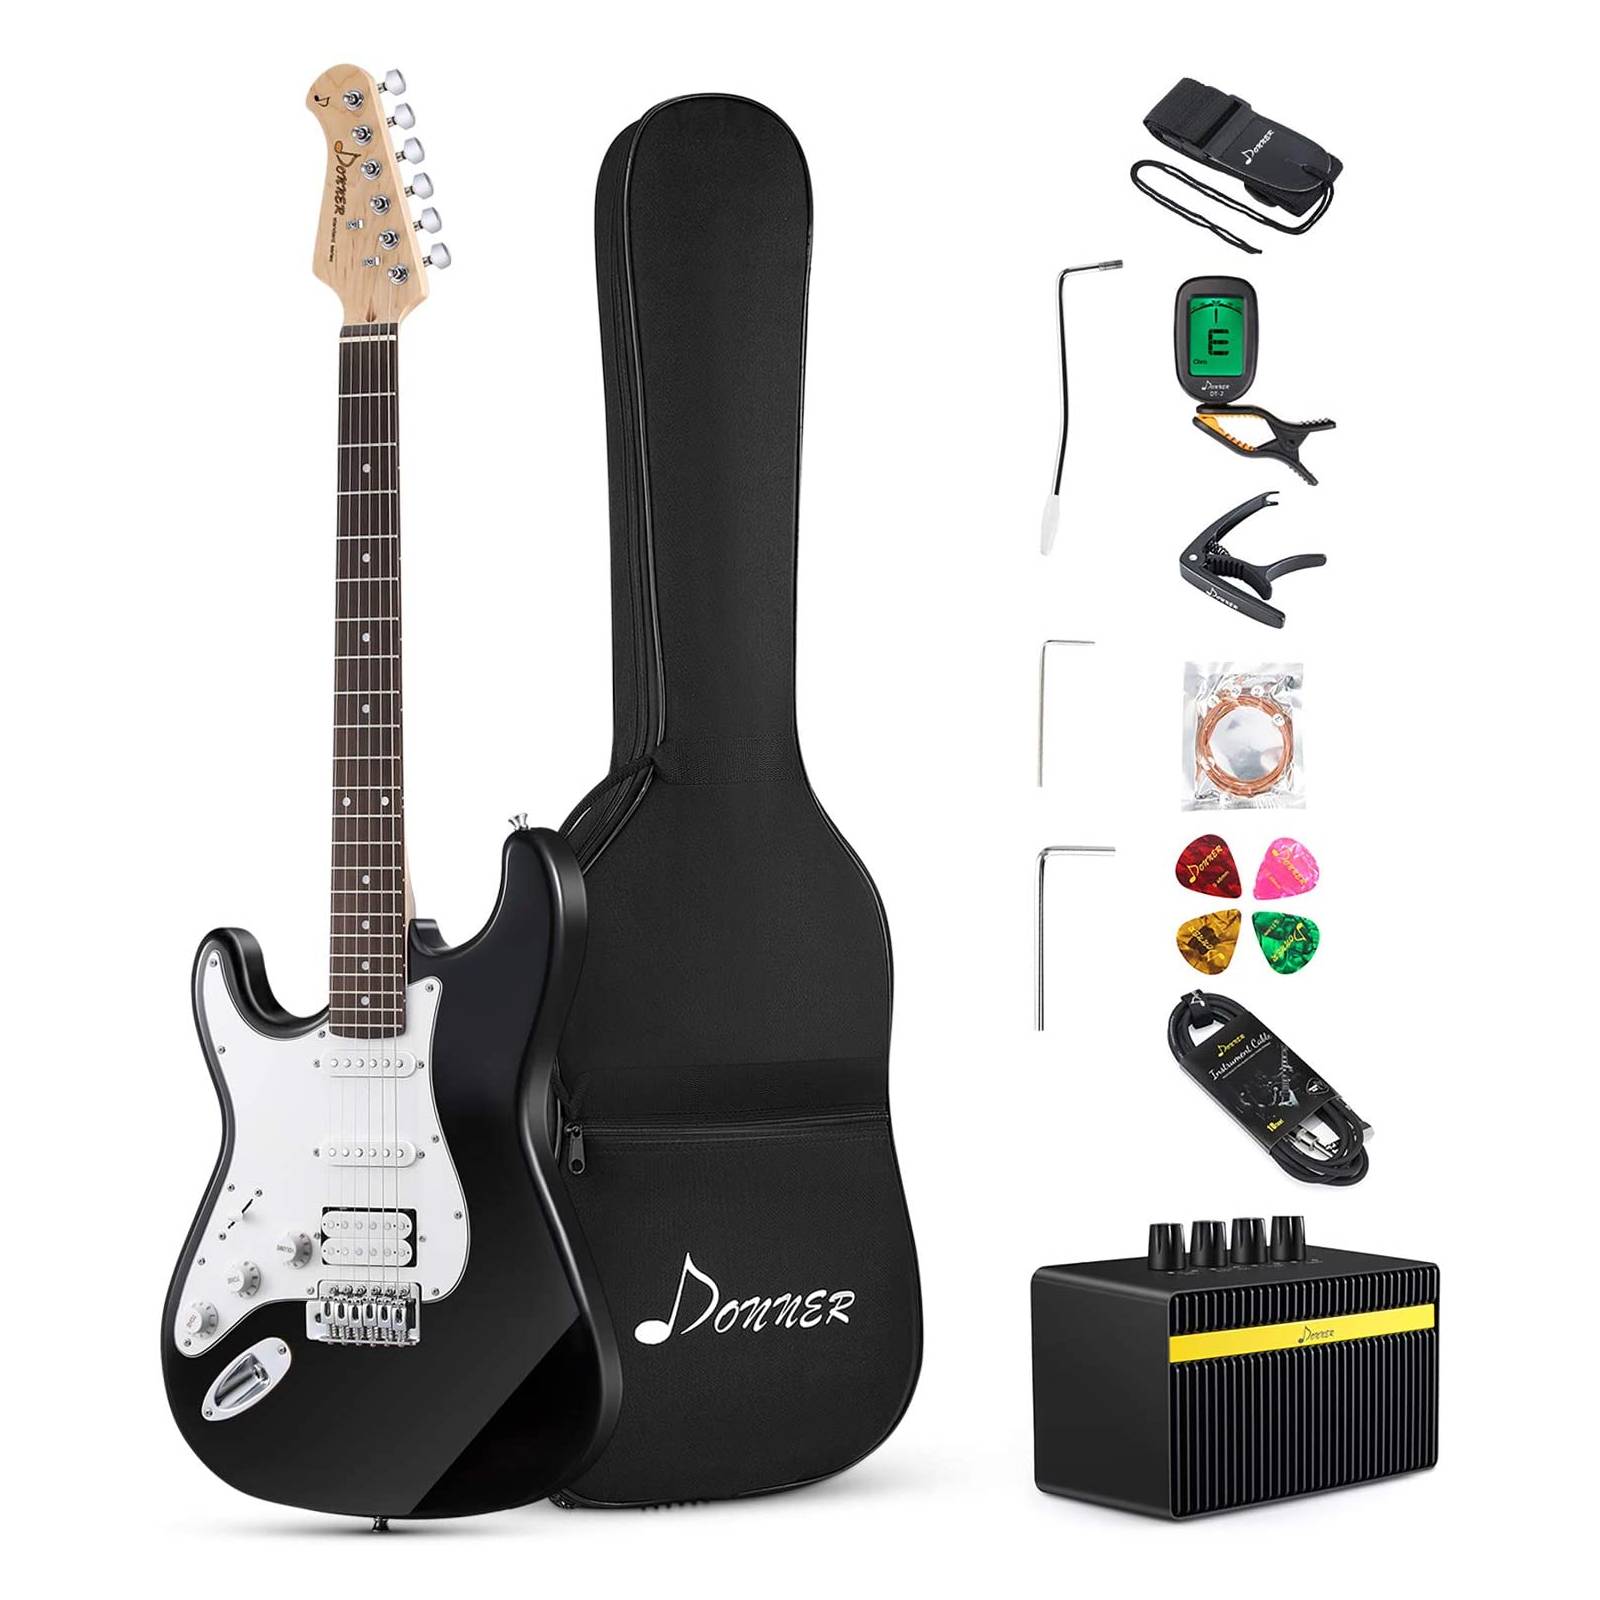 

Donner 39 Inch Left Handed Electric Guitar Beginner Kit Solid Body HSS Pick Up Black Full Size for Lefty Starter with Amplifier, Bag, Capo, Strap, String, Tuner, Cable, Picks,DST-1BL